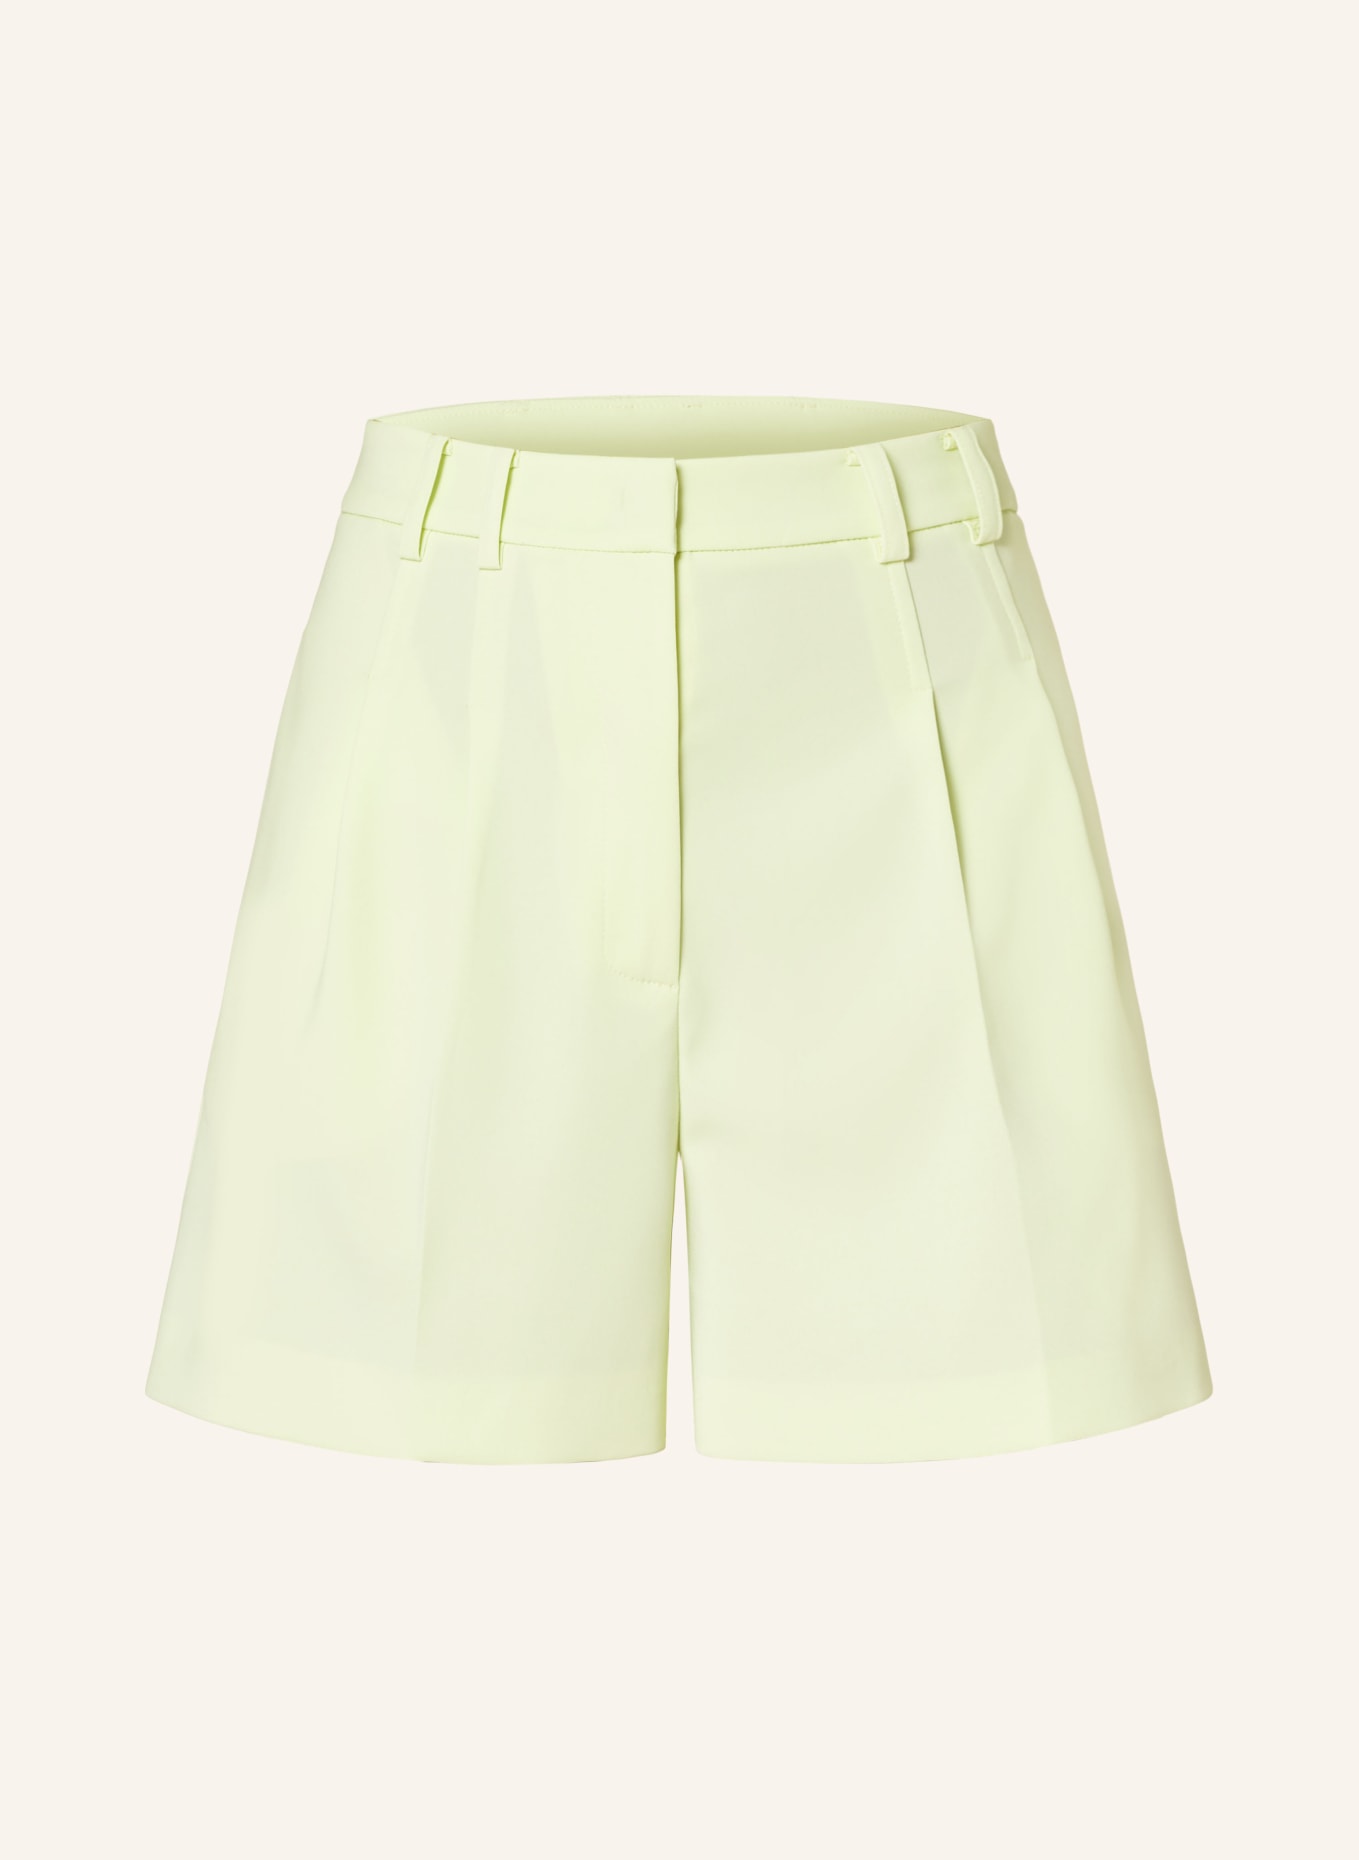 PATRIZIA PEPE Shorts, Farbe: G568 Citrine Green (Bild 1)